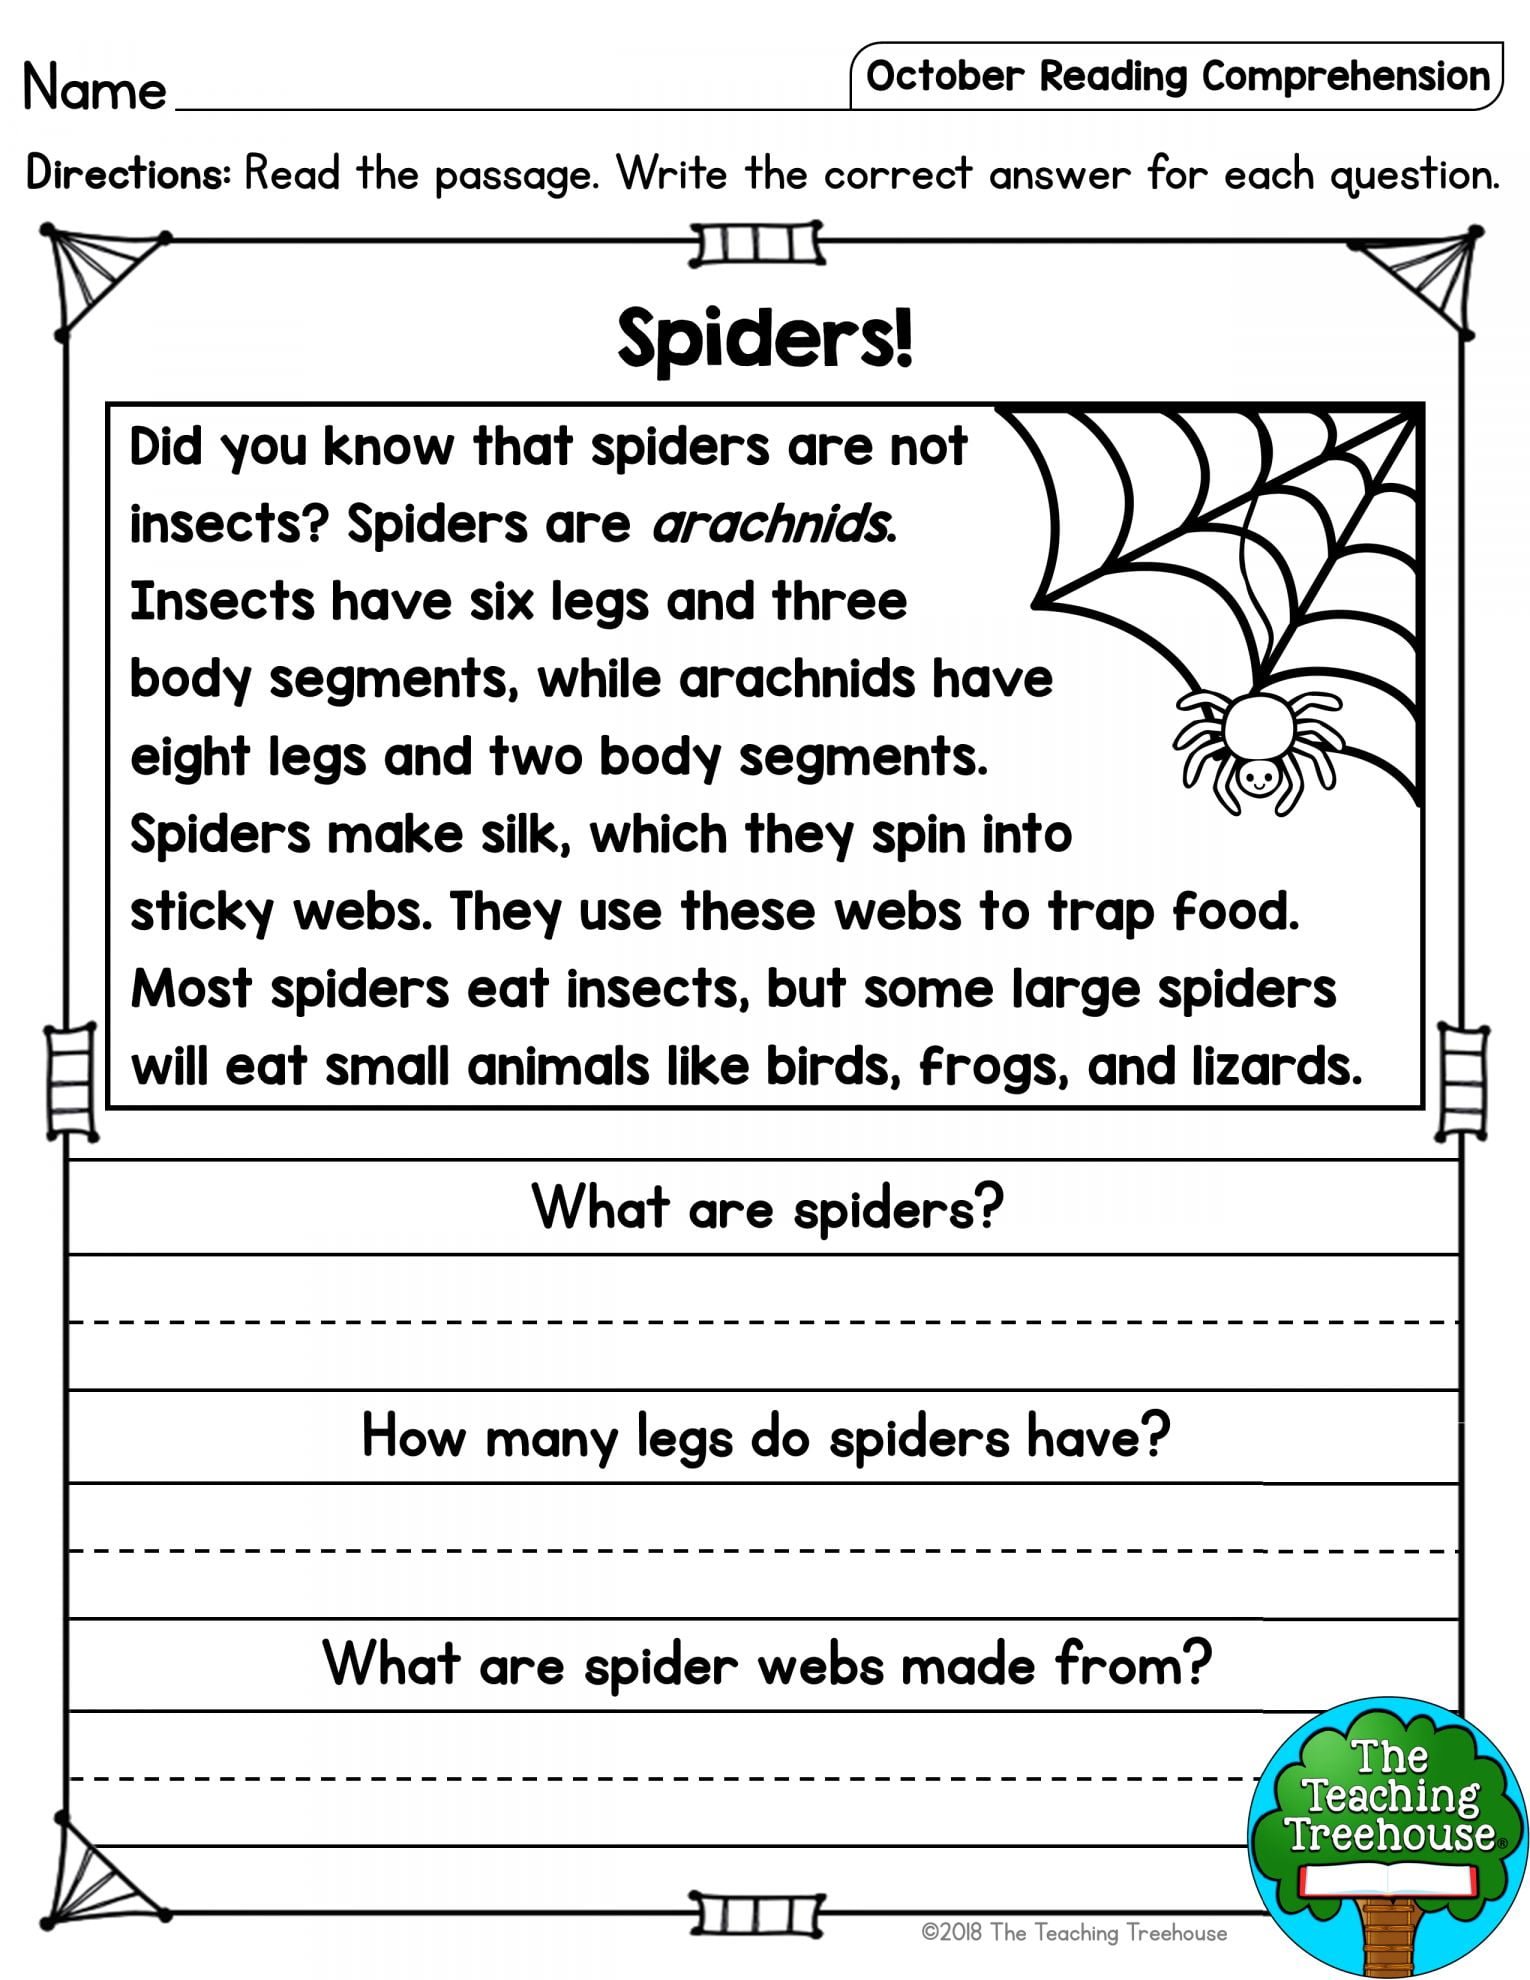 Spider Web Reading Comprehension Worksheets WorksheetsCity